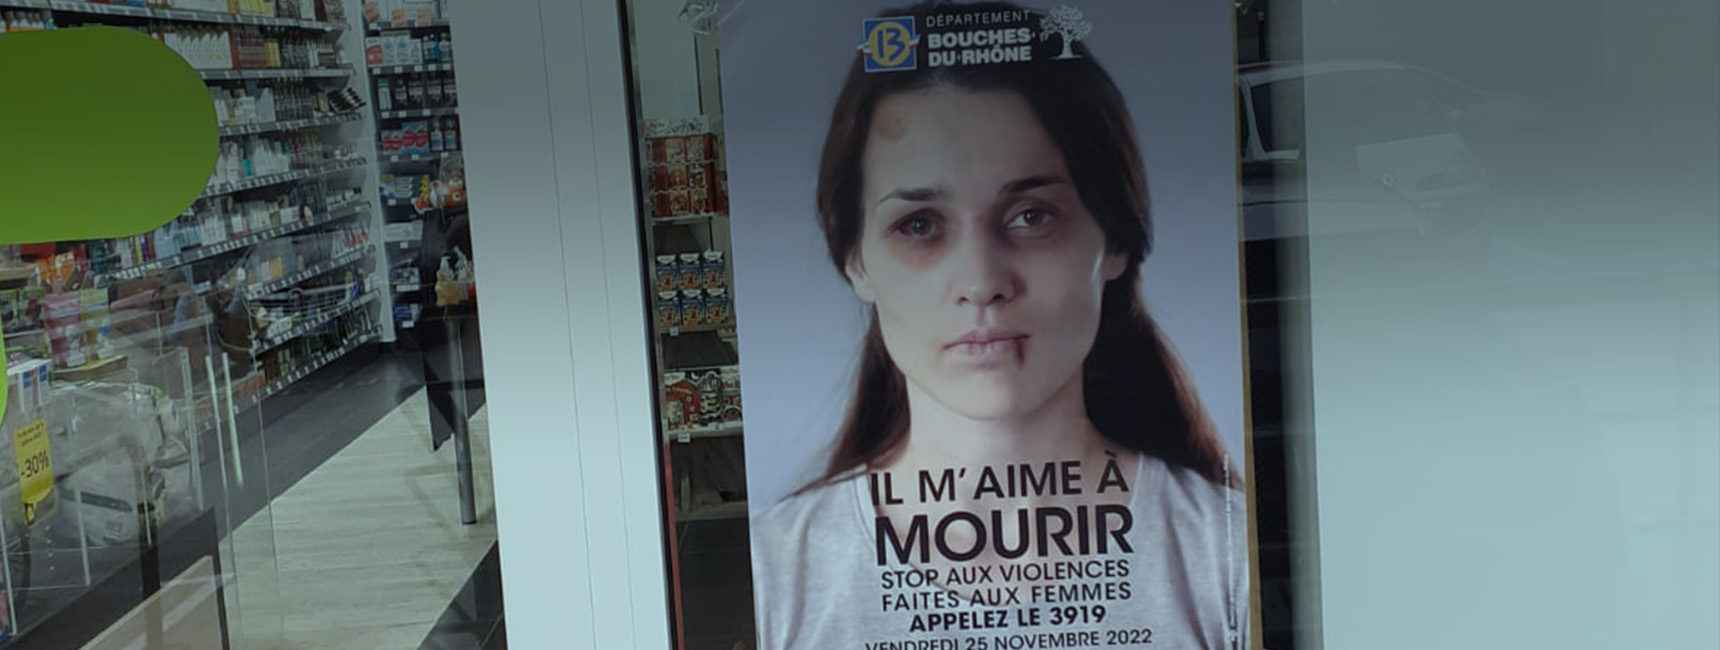 header - violences faites aux femmes - Keemia Marseille - région PACA